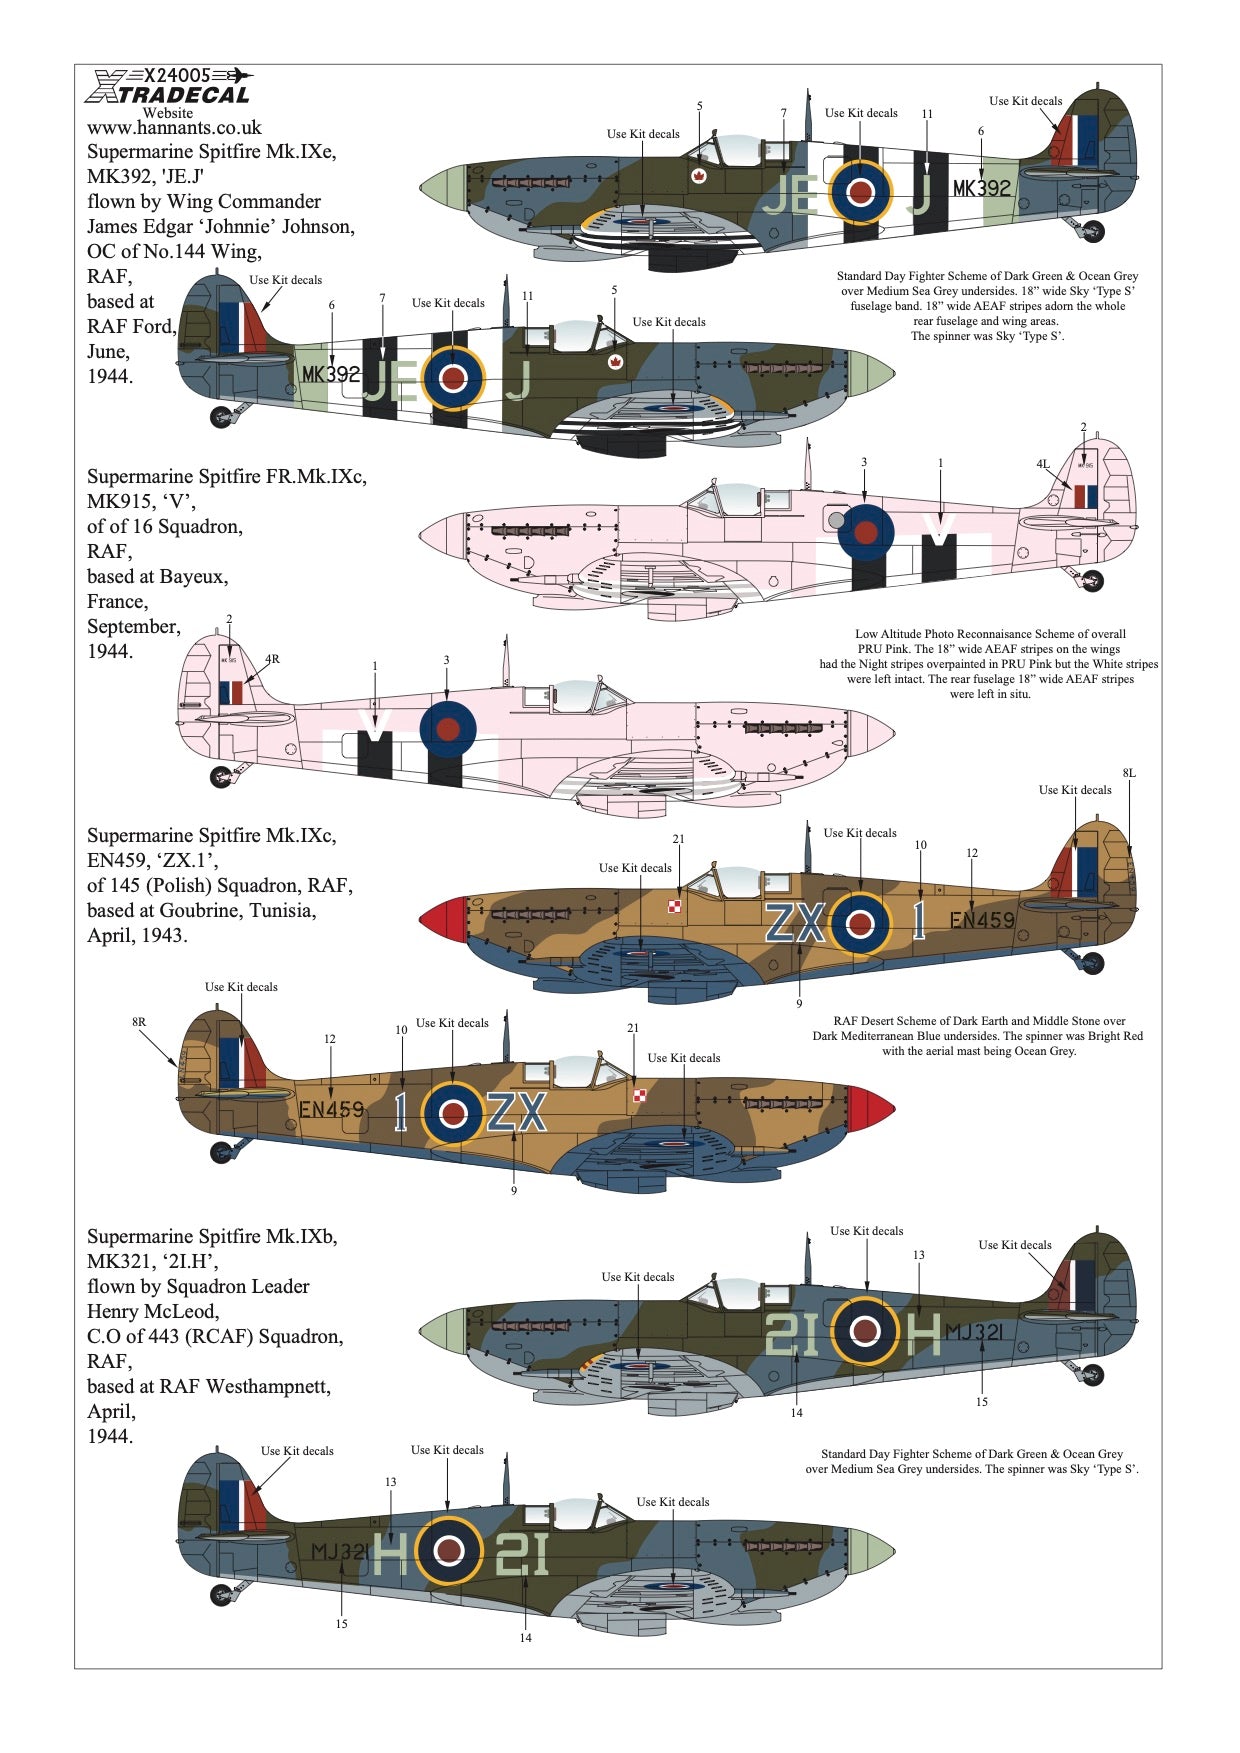 Xtradecal X24005 Supermarine Spitfire Mk.IX Collection Part 2 1/24